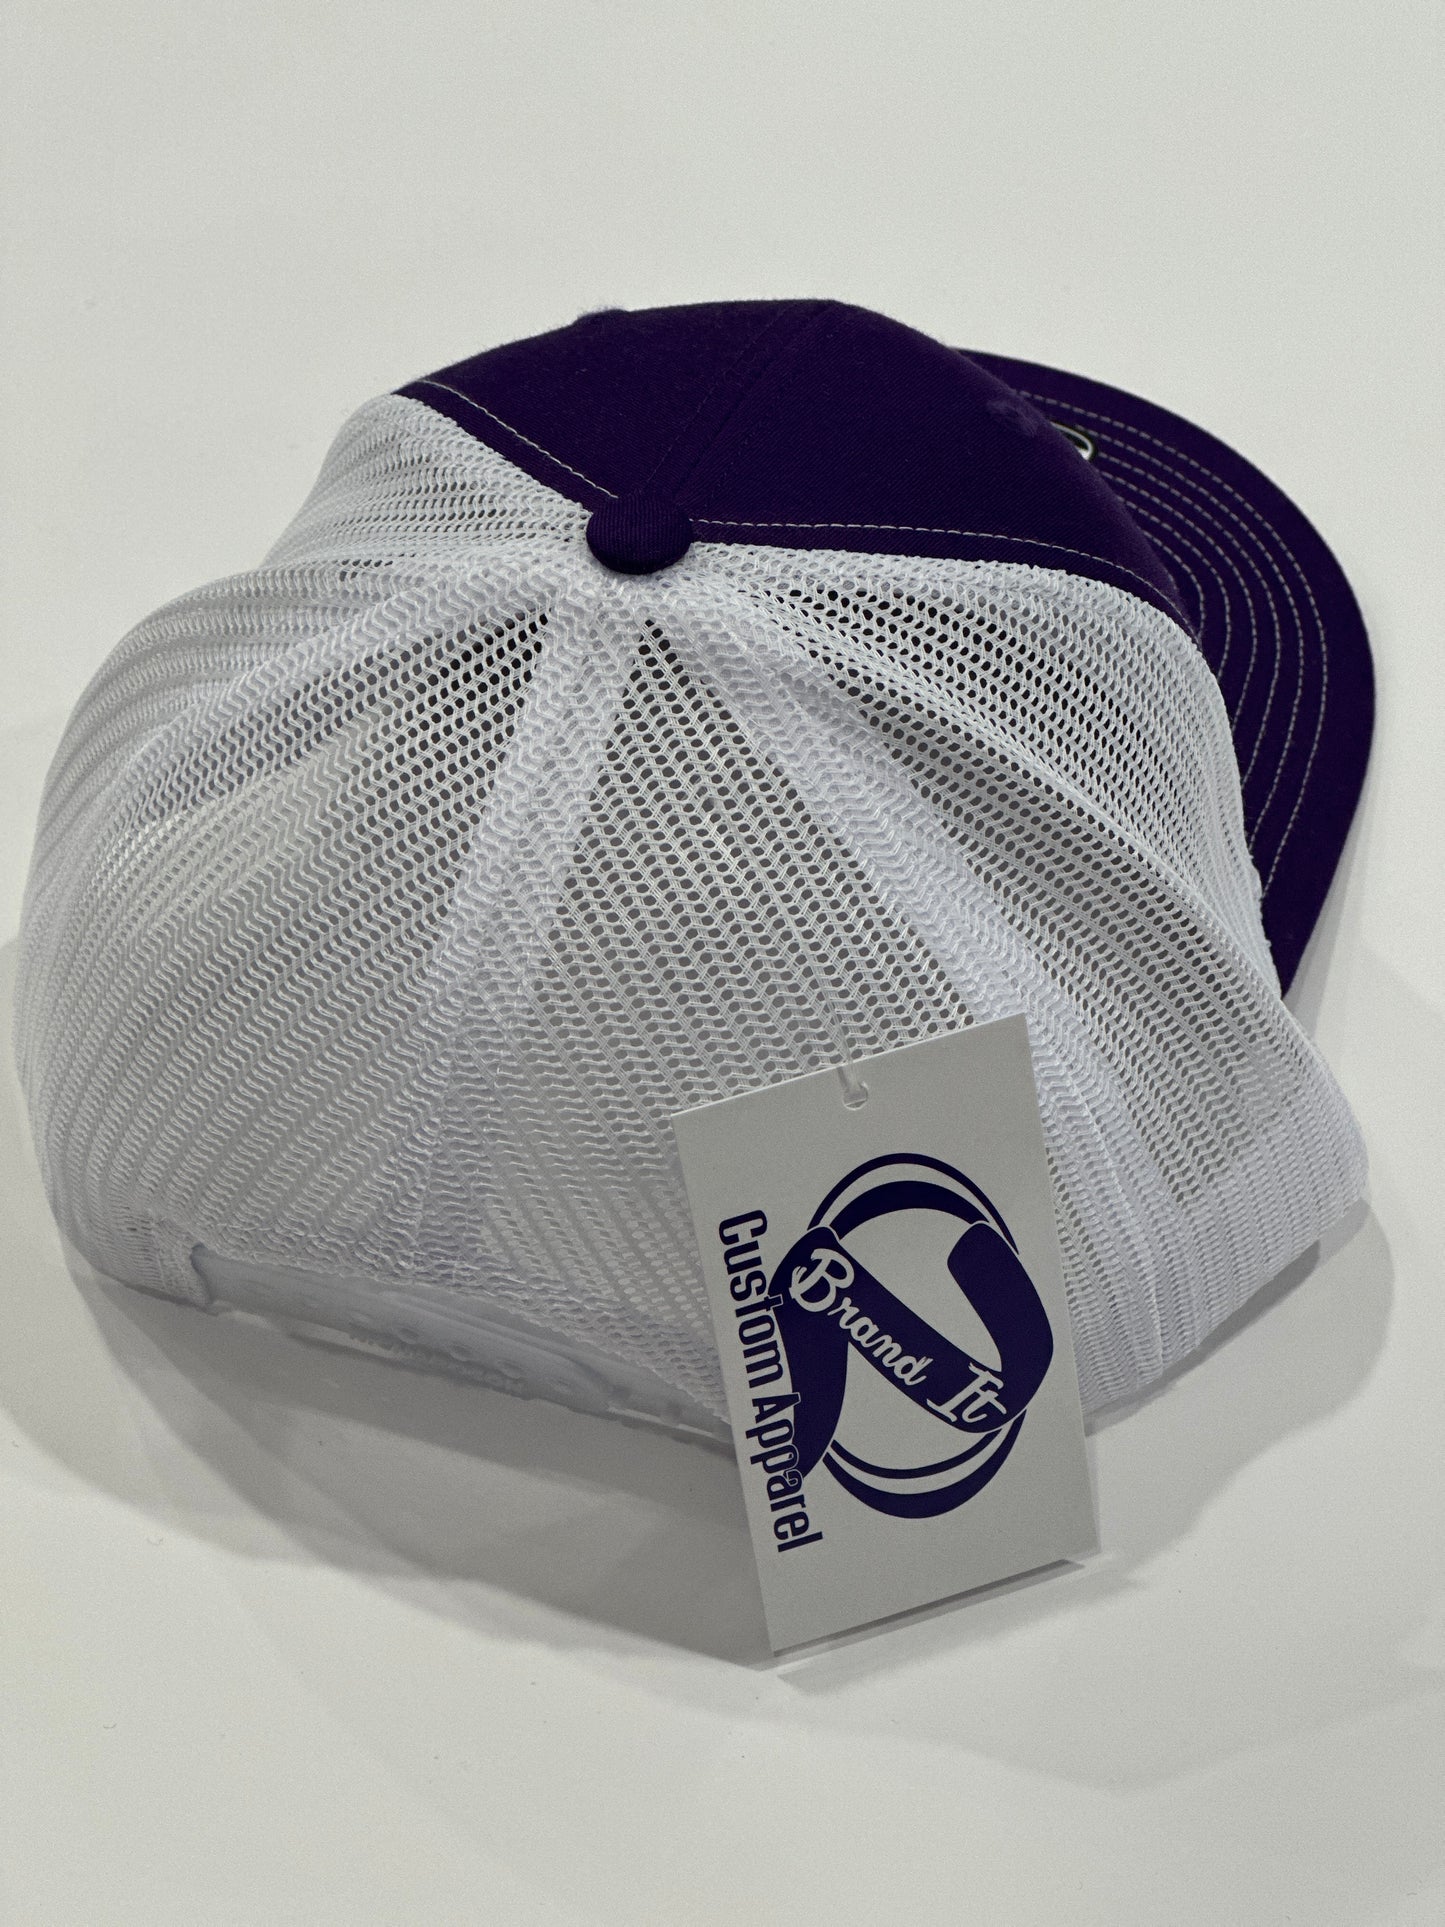 Richardson Panther Golf Hat Purple or Grey